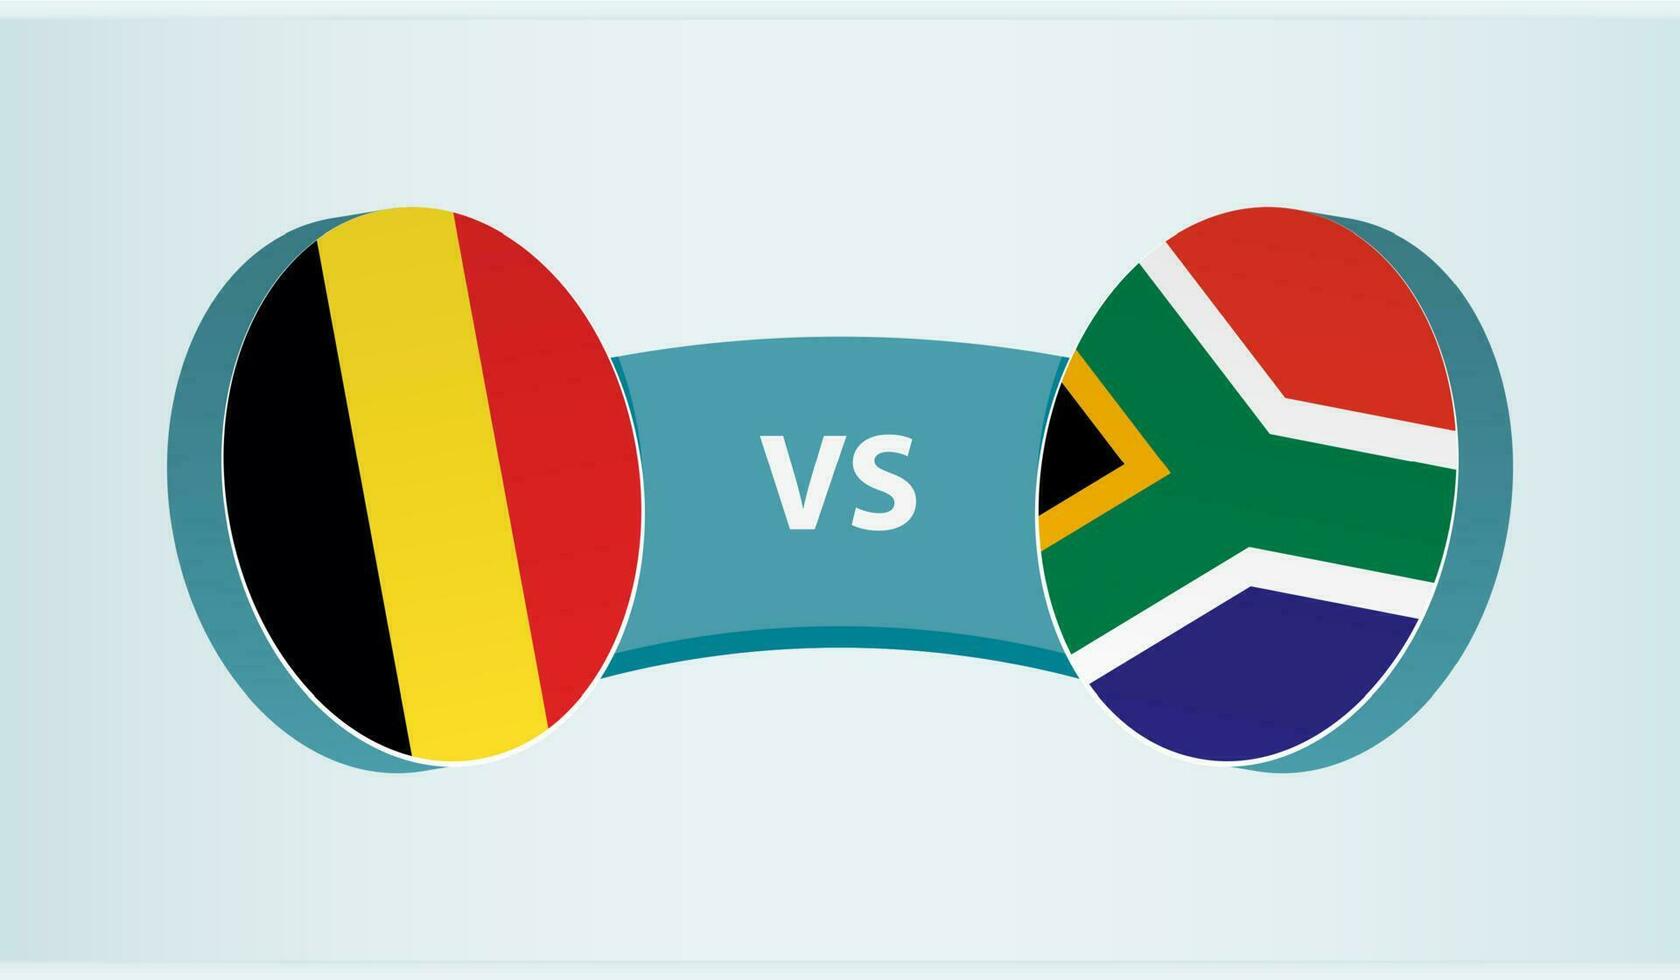 belgien mot söder afrika, team sporter konkurrens begrepp. vektor